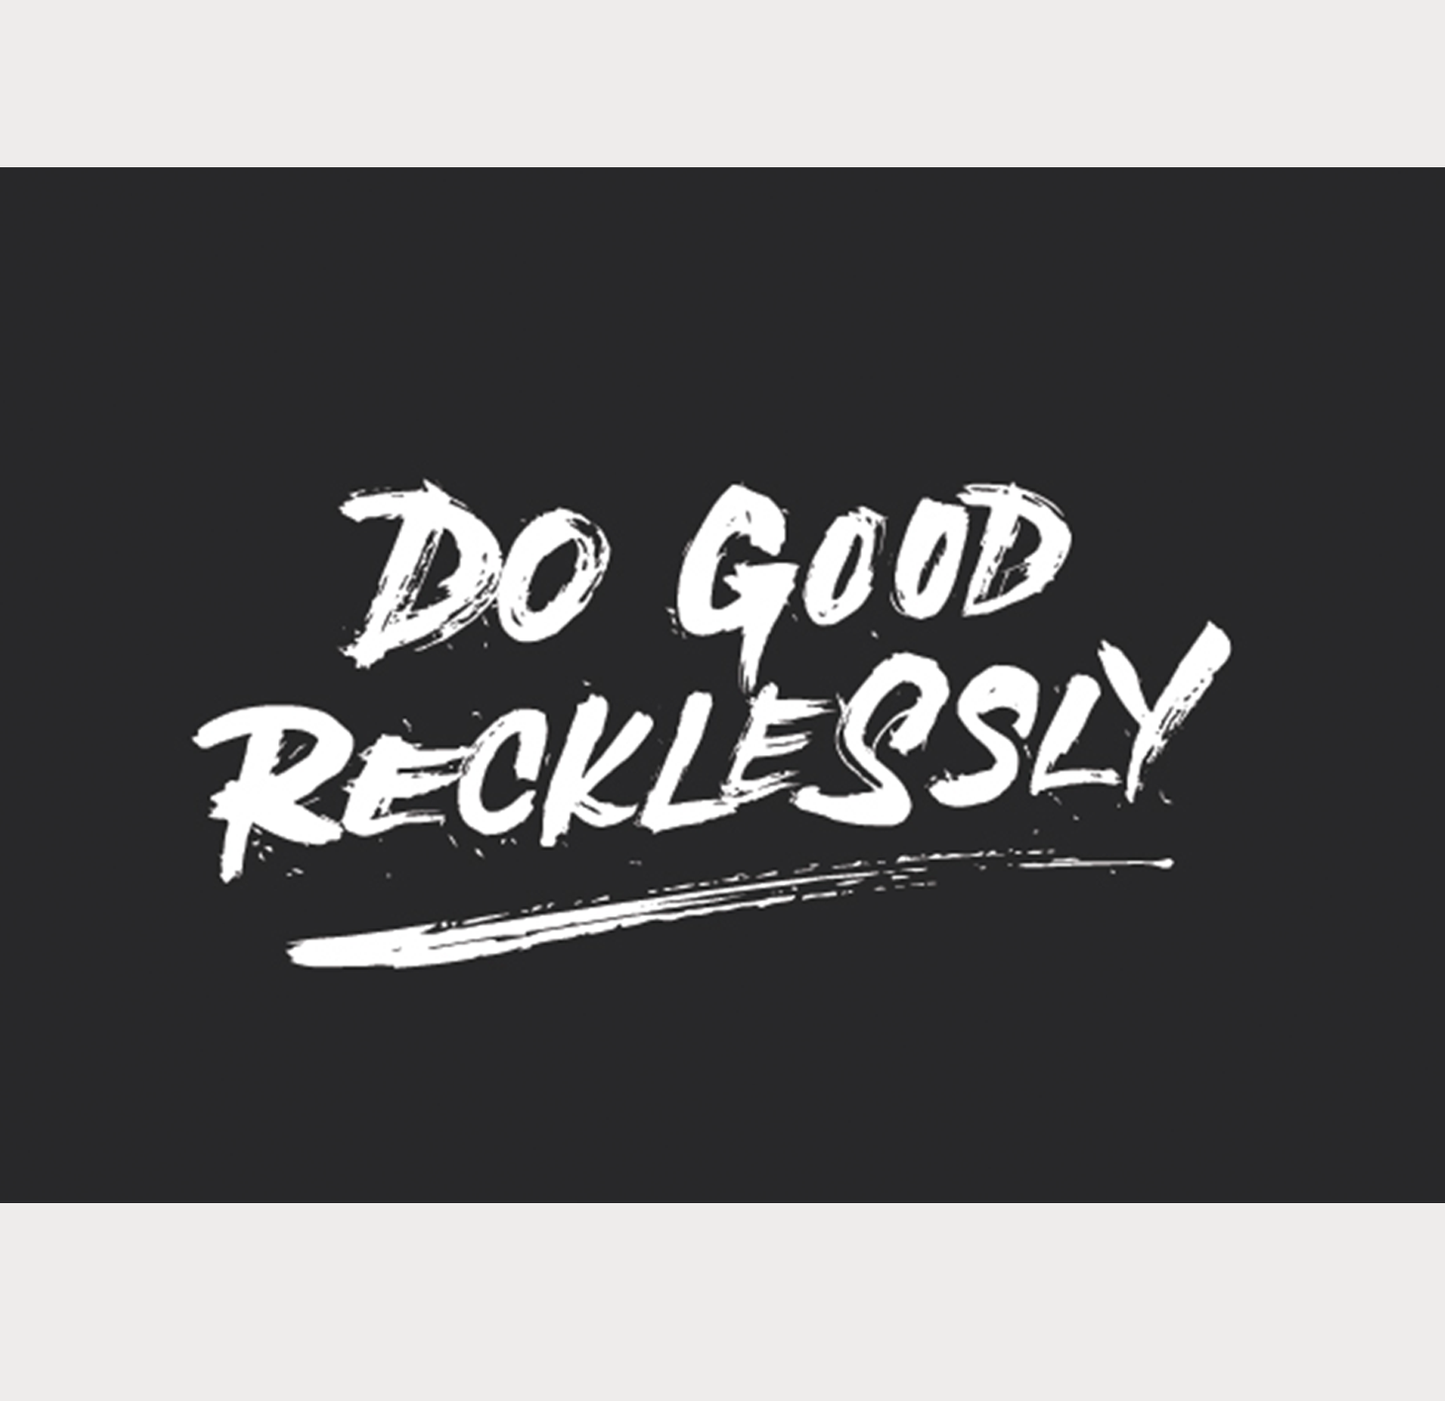 Do Good Recklessly